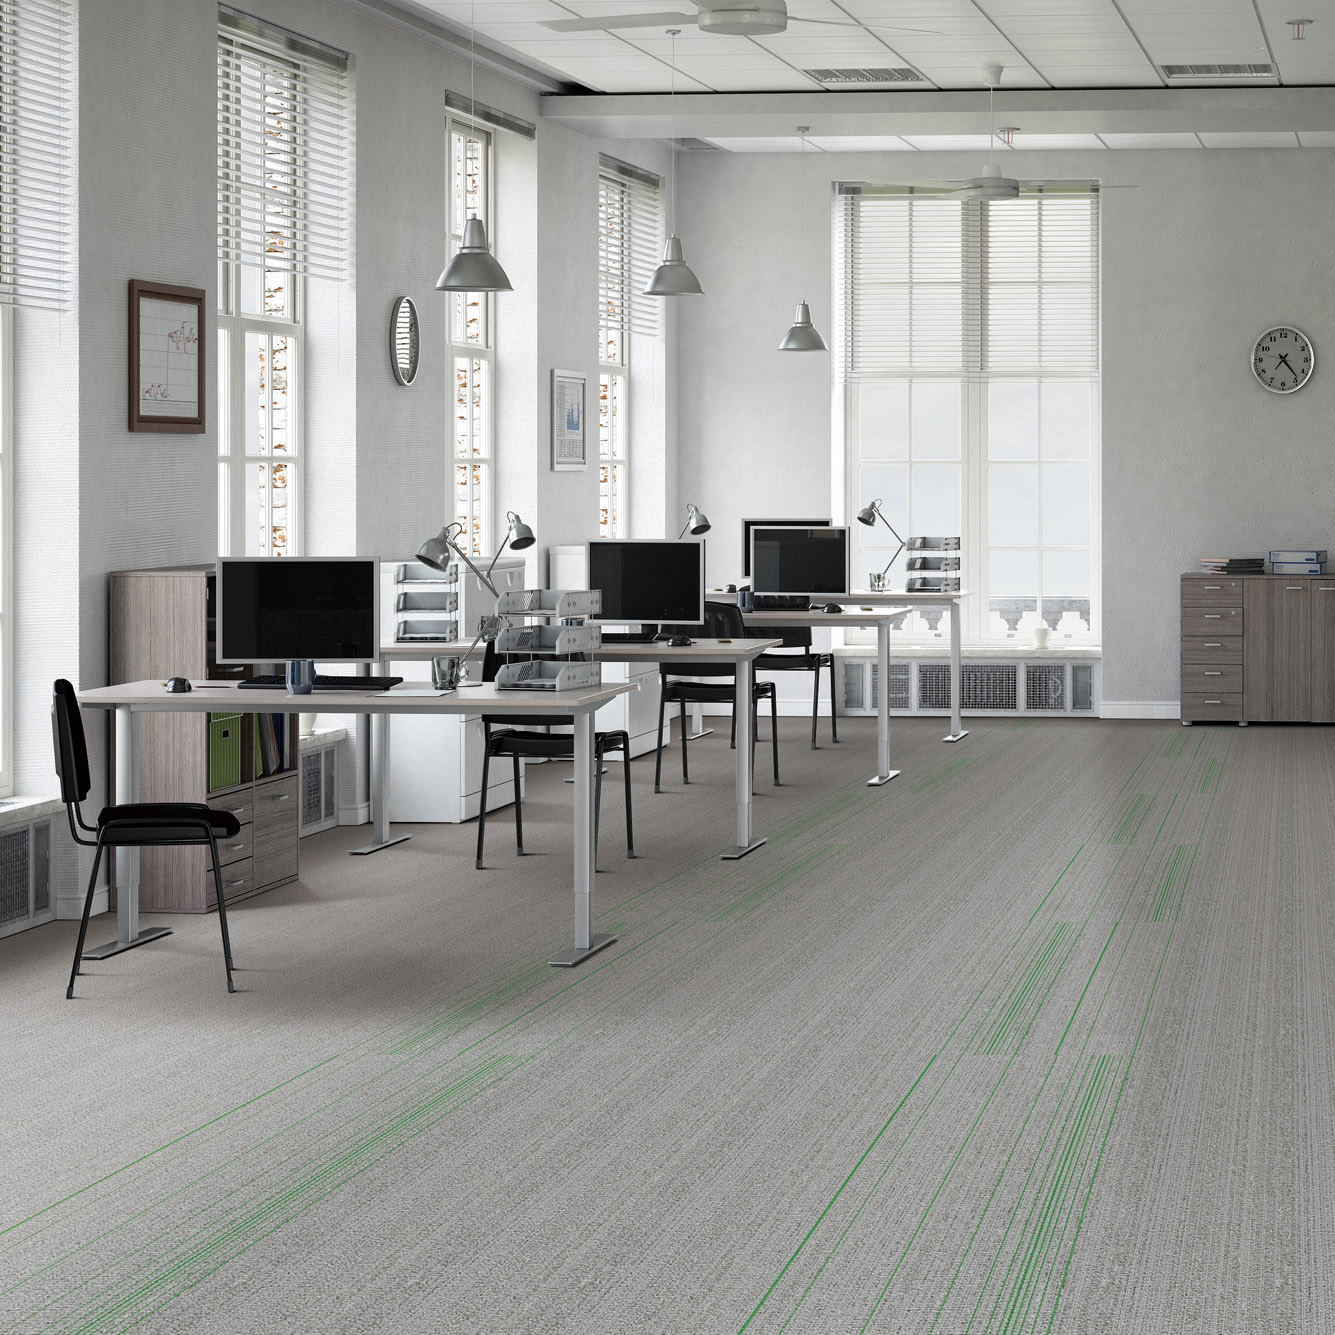 Customized Rubber Backing Commercial Carpet Tiles Lock Together 500 x 500 Floor Office Modular Carpet Tiles